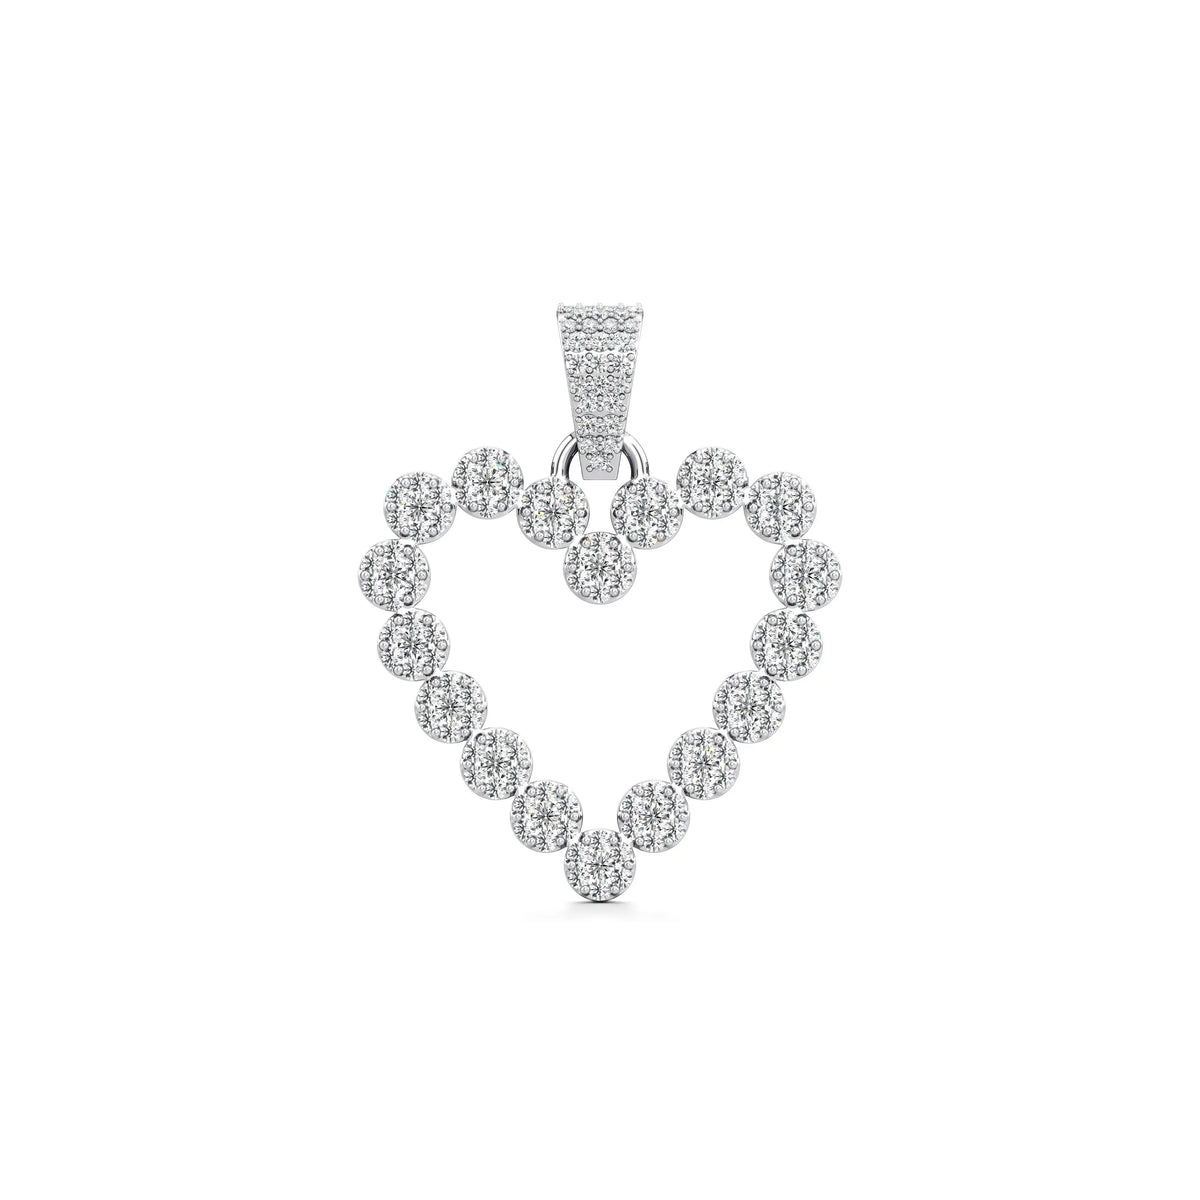 Brilliant Love Lab Grown Diamond Pendant